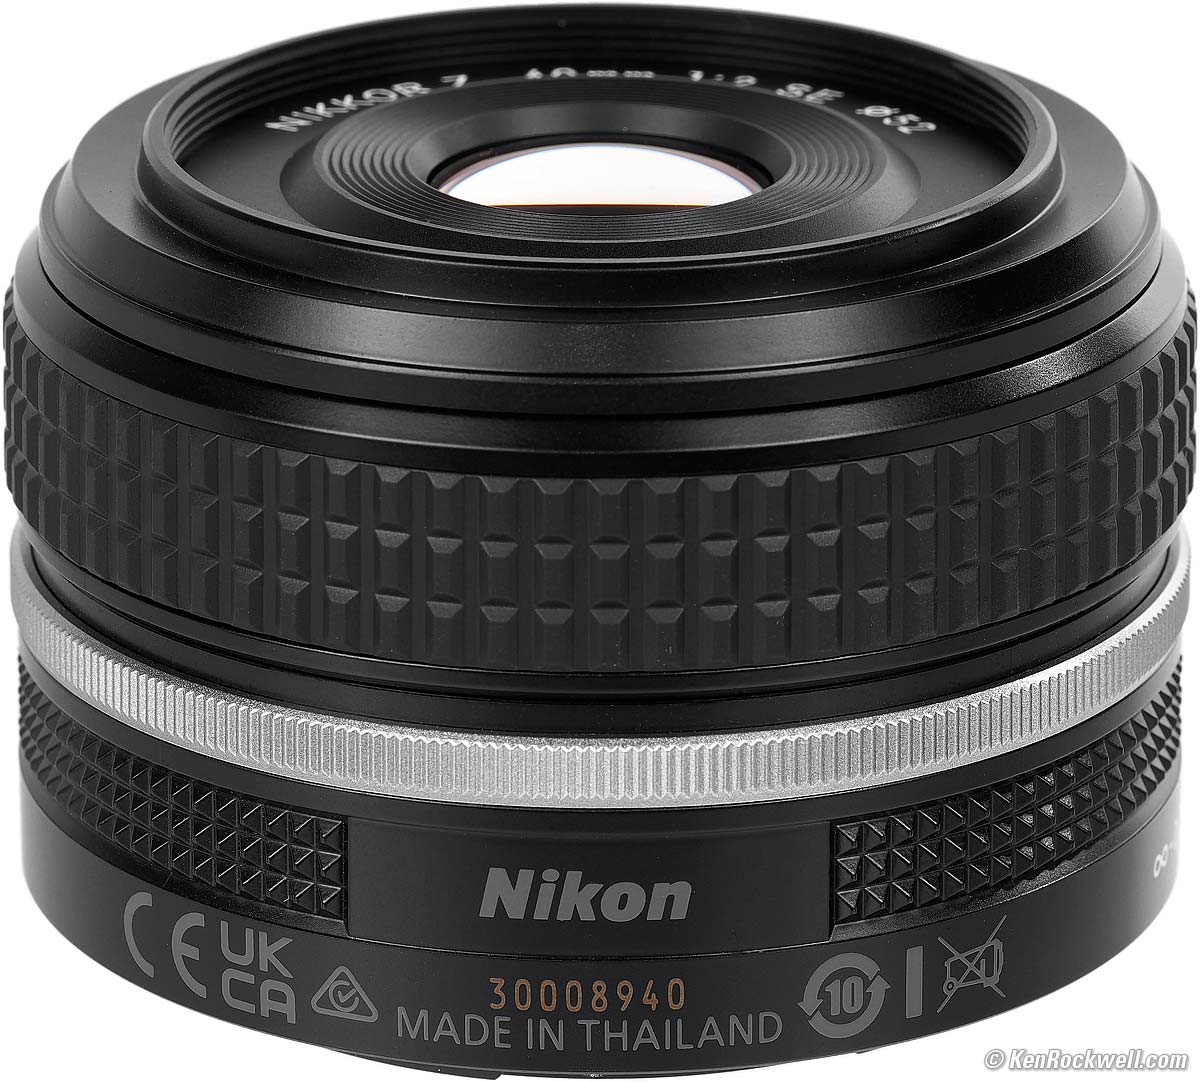 Ken by Z Rockwell SE f/2 Images 40mm & Sample Review Nikon